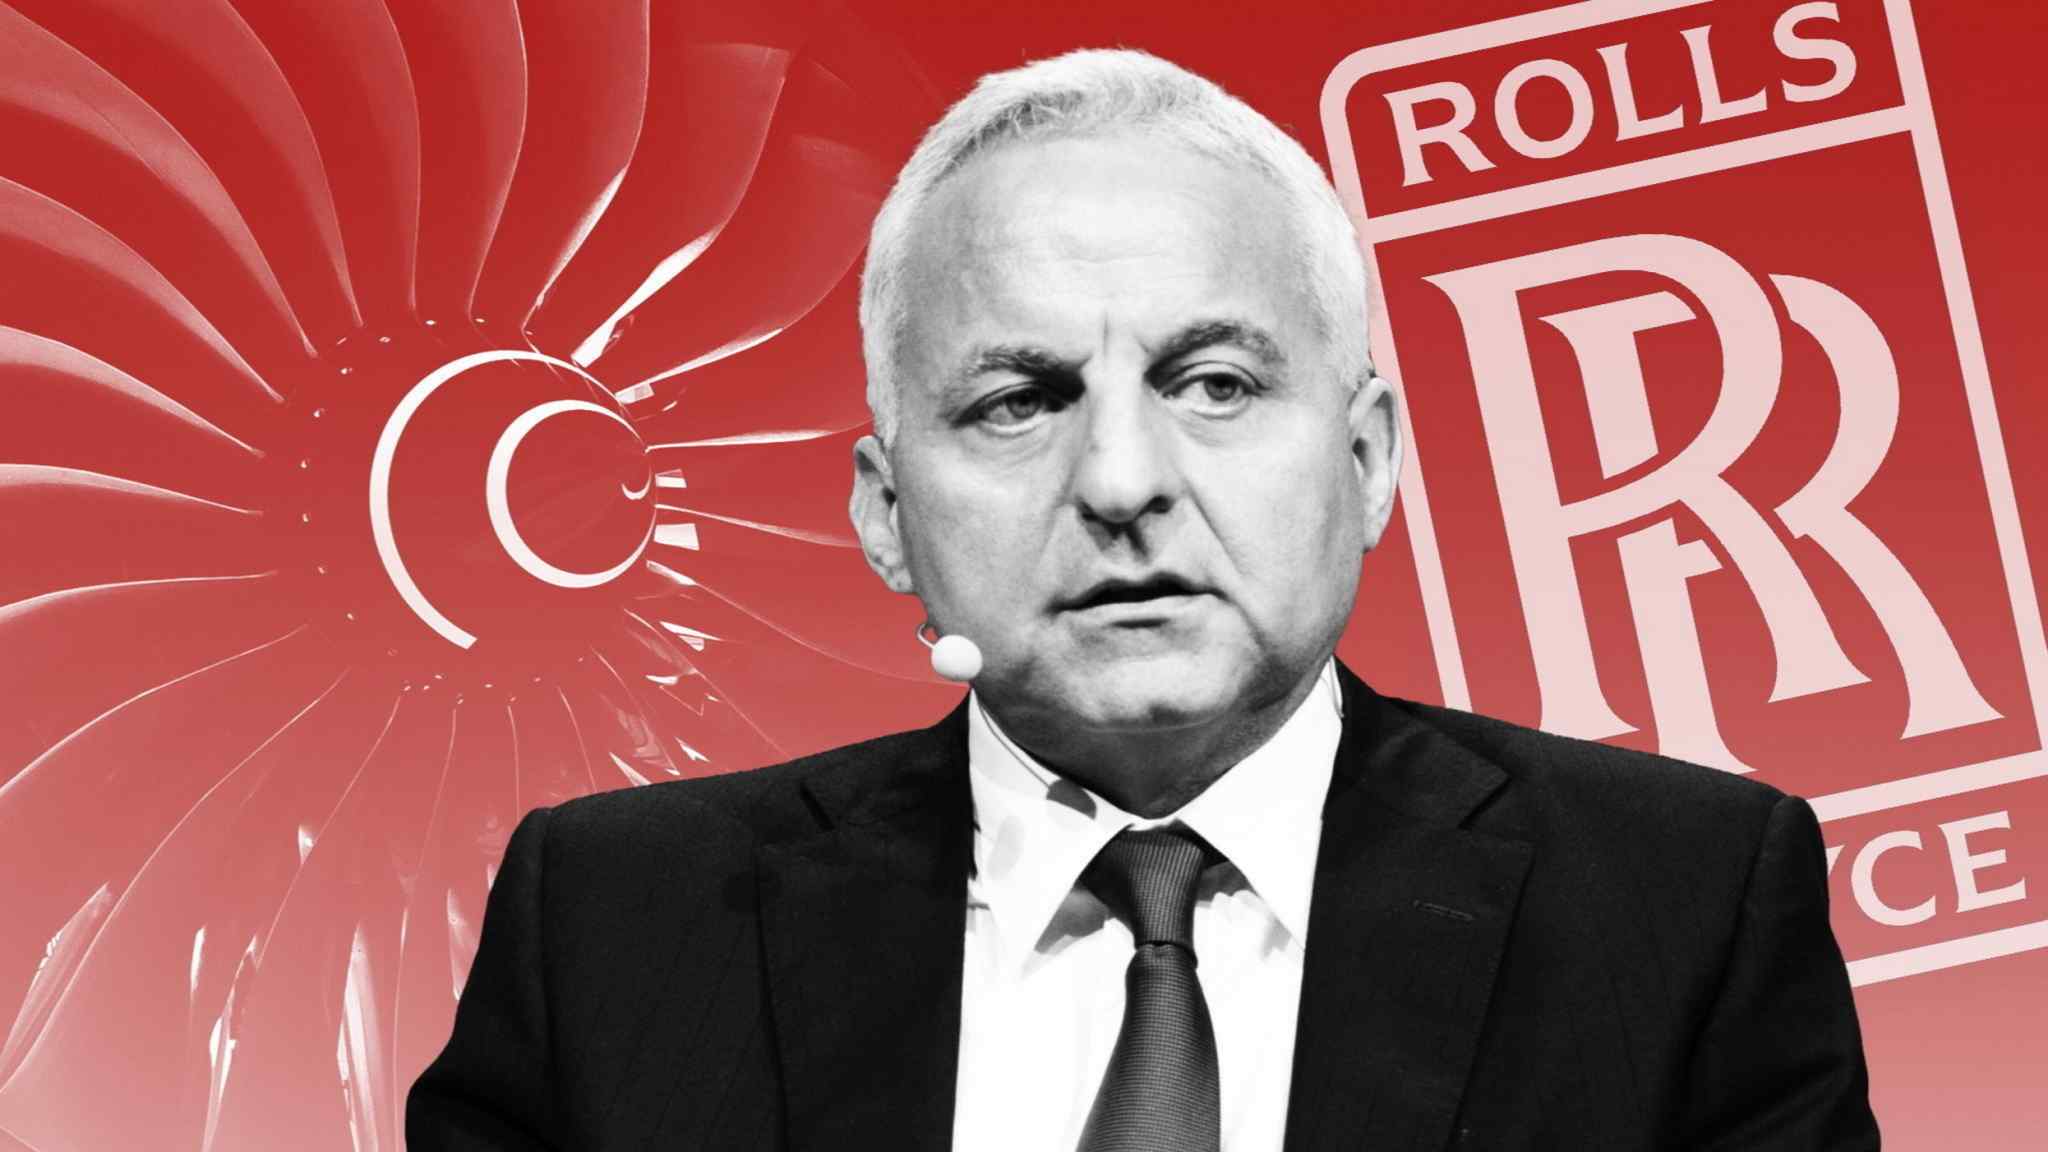 Rolls-Royce’s new chief warns company is a ‘burning platform’